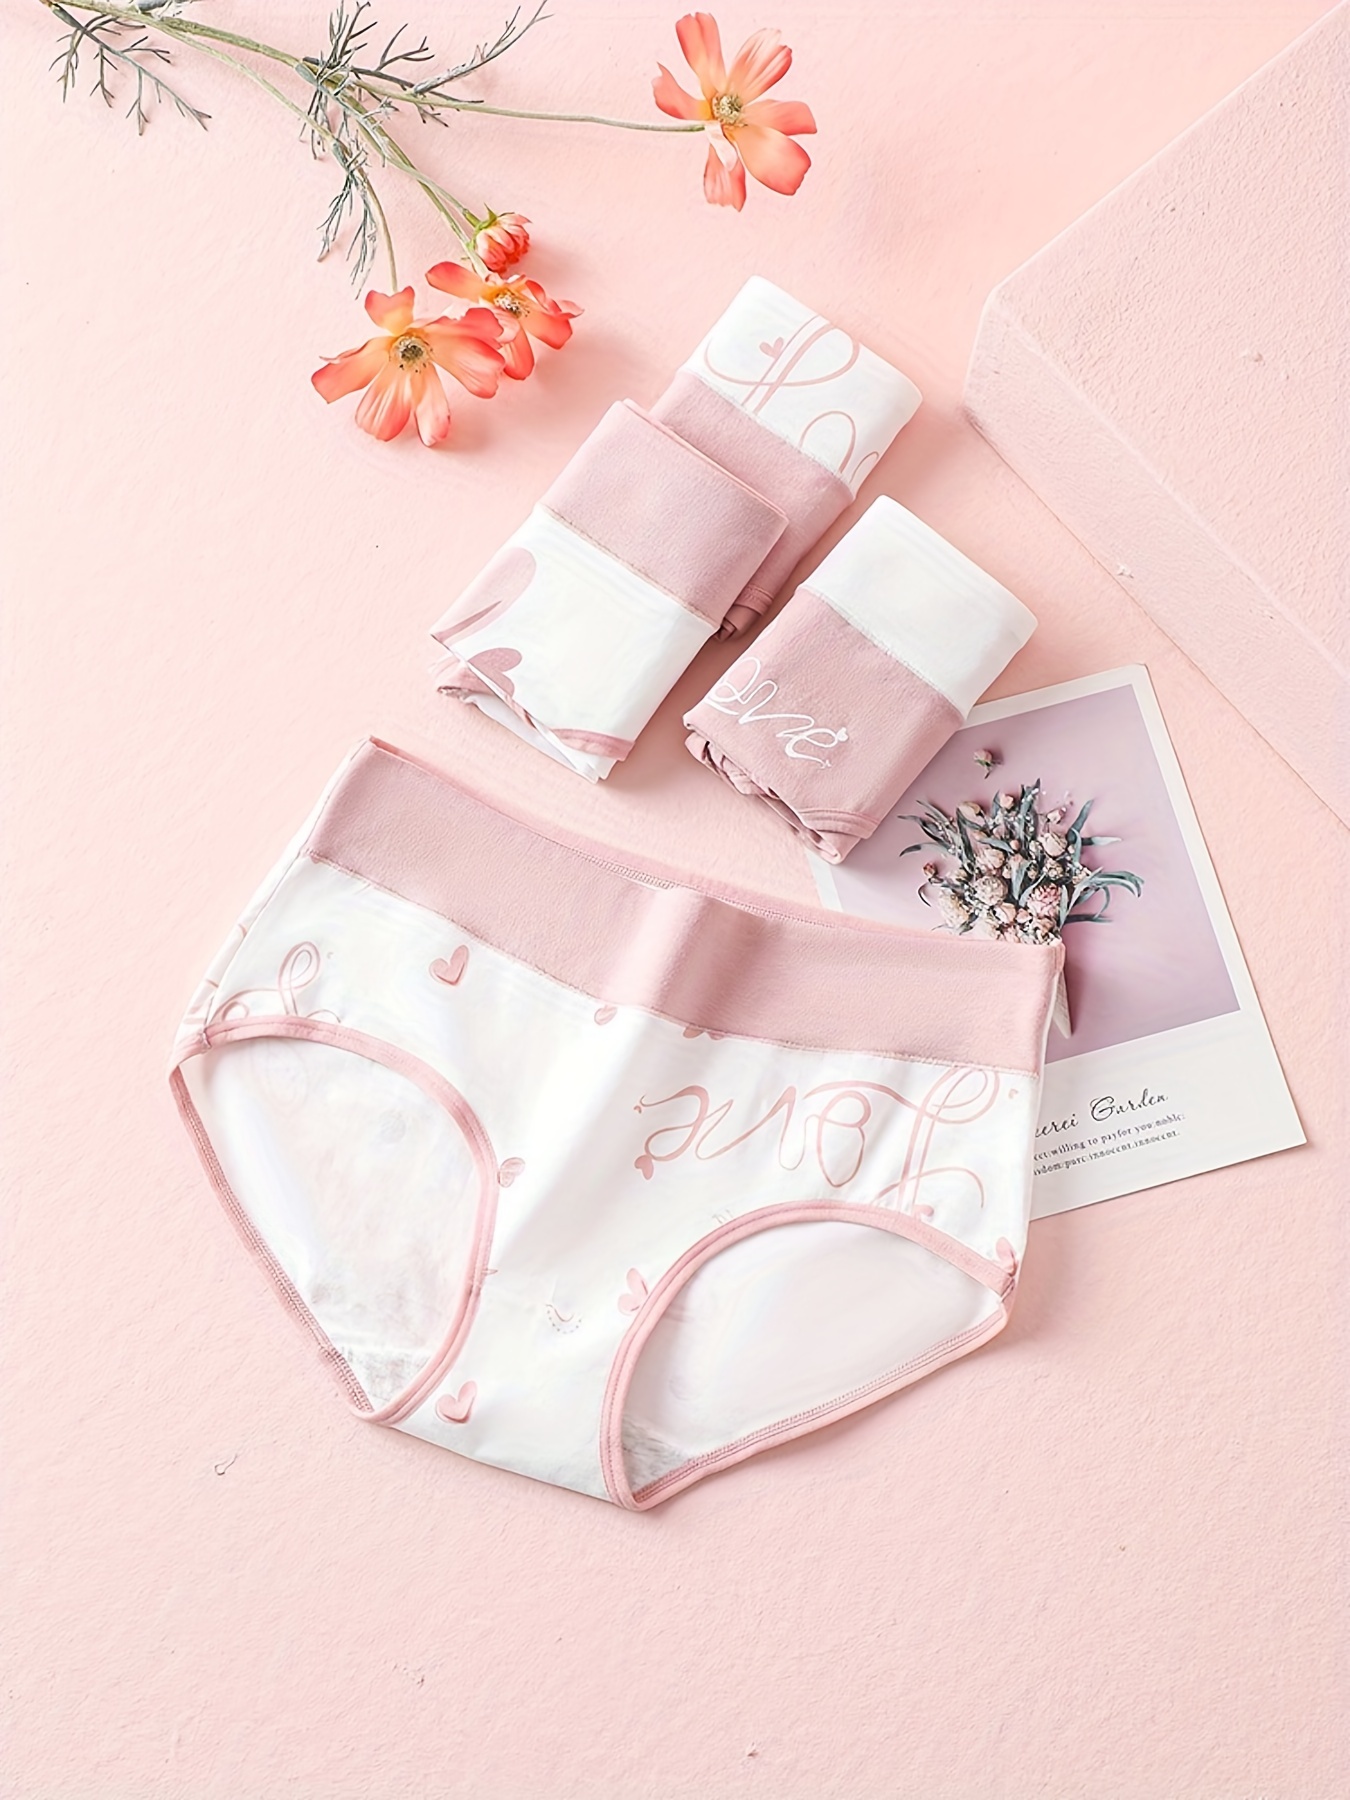 Strawberry Print Briefs Cute Breathable Intimates Panties - Temu